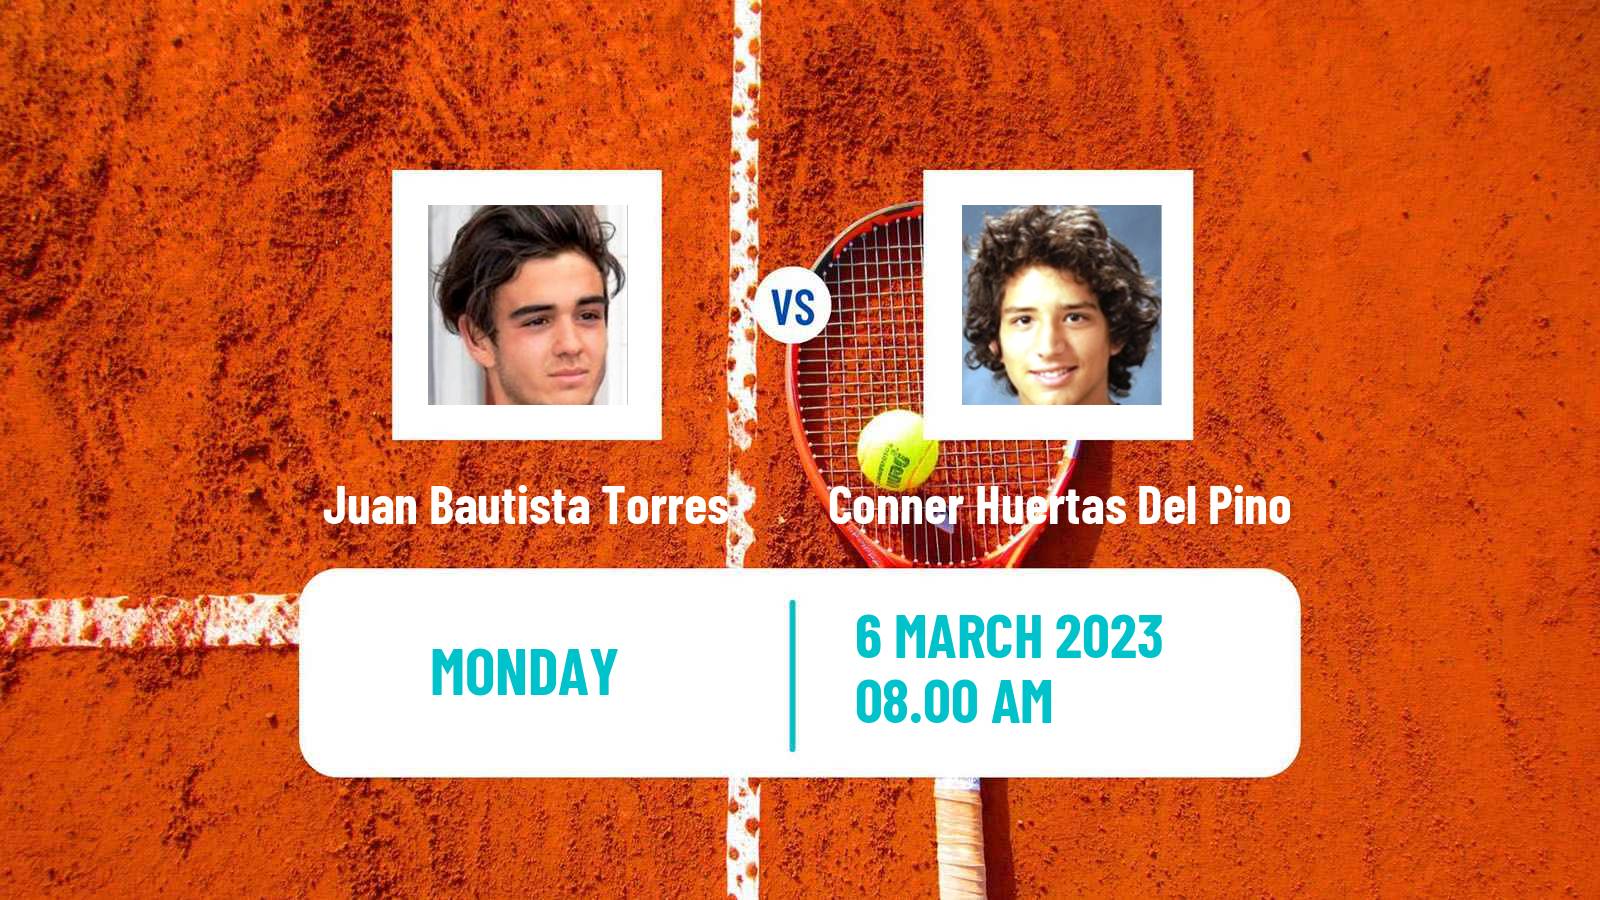 Tennis ATP Challenger Juan Bautista Torres - Conner Huertas Del Pino